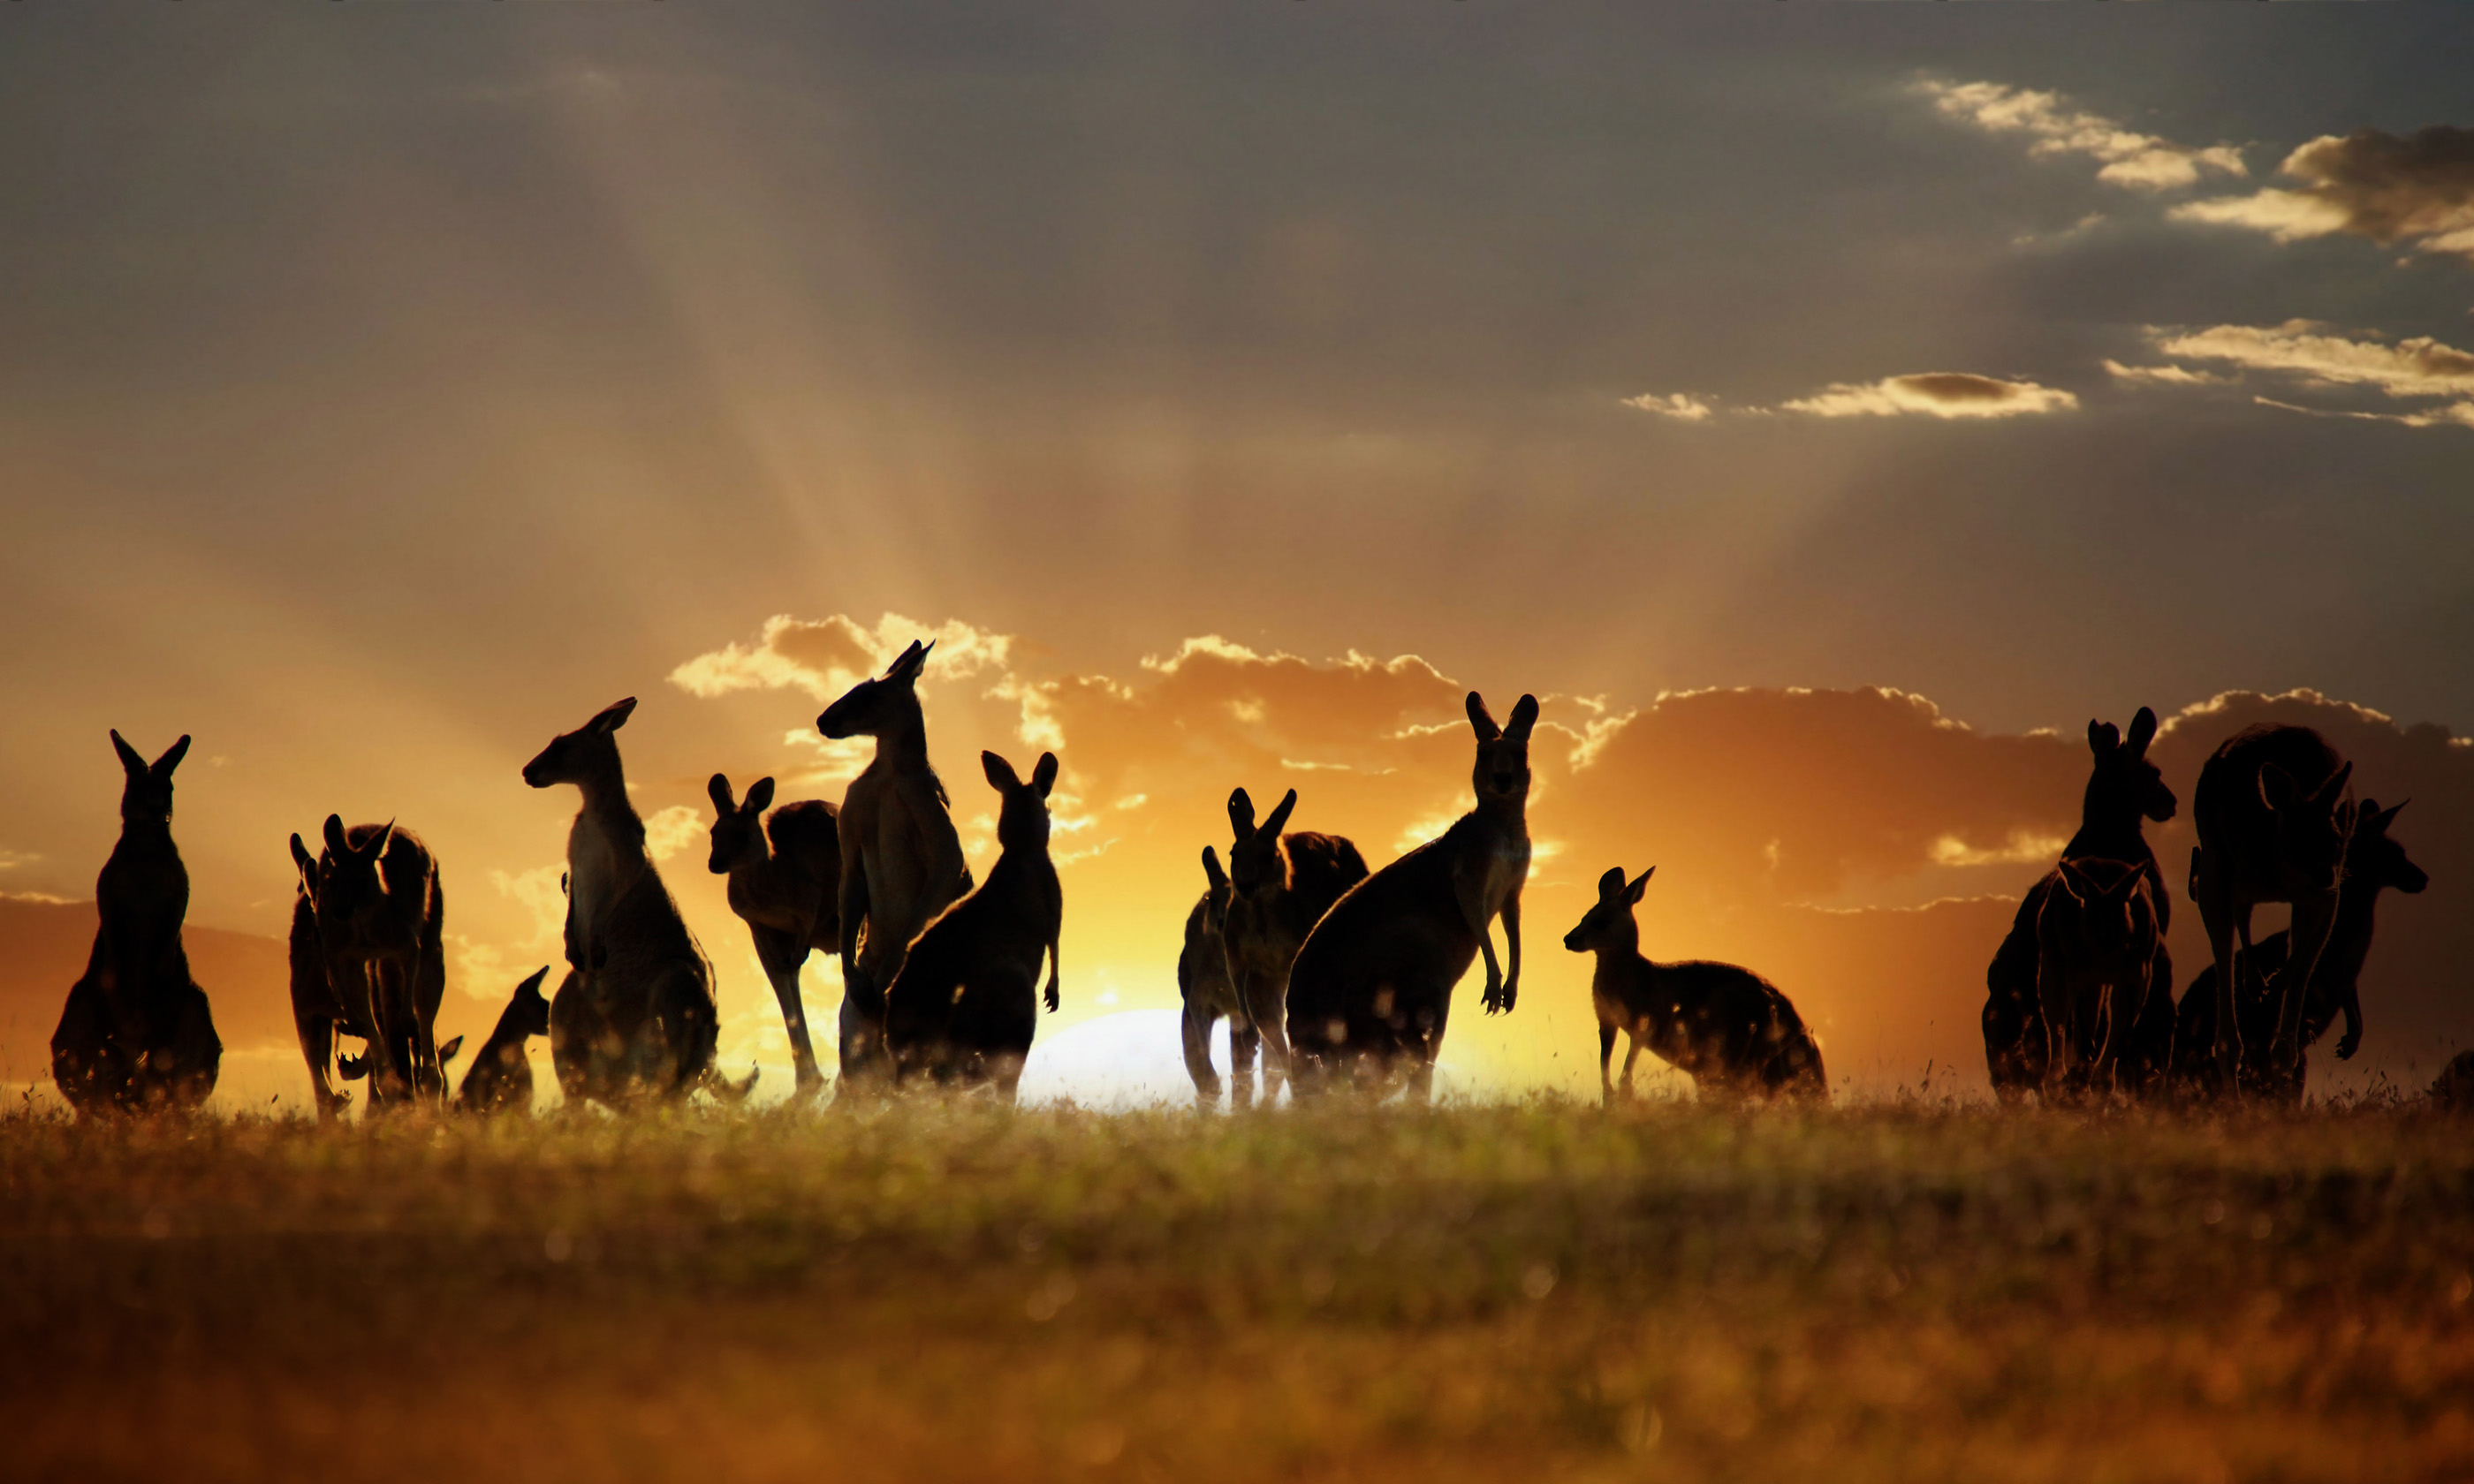 Kangaroos in the outback (Shutterstock: see main credit below)